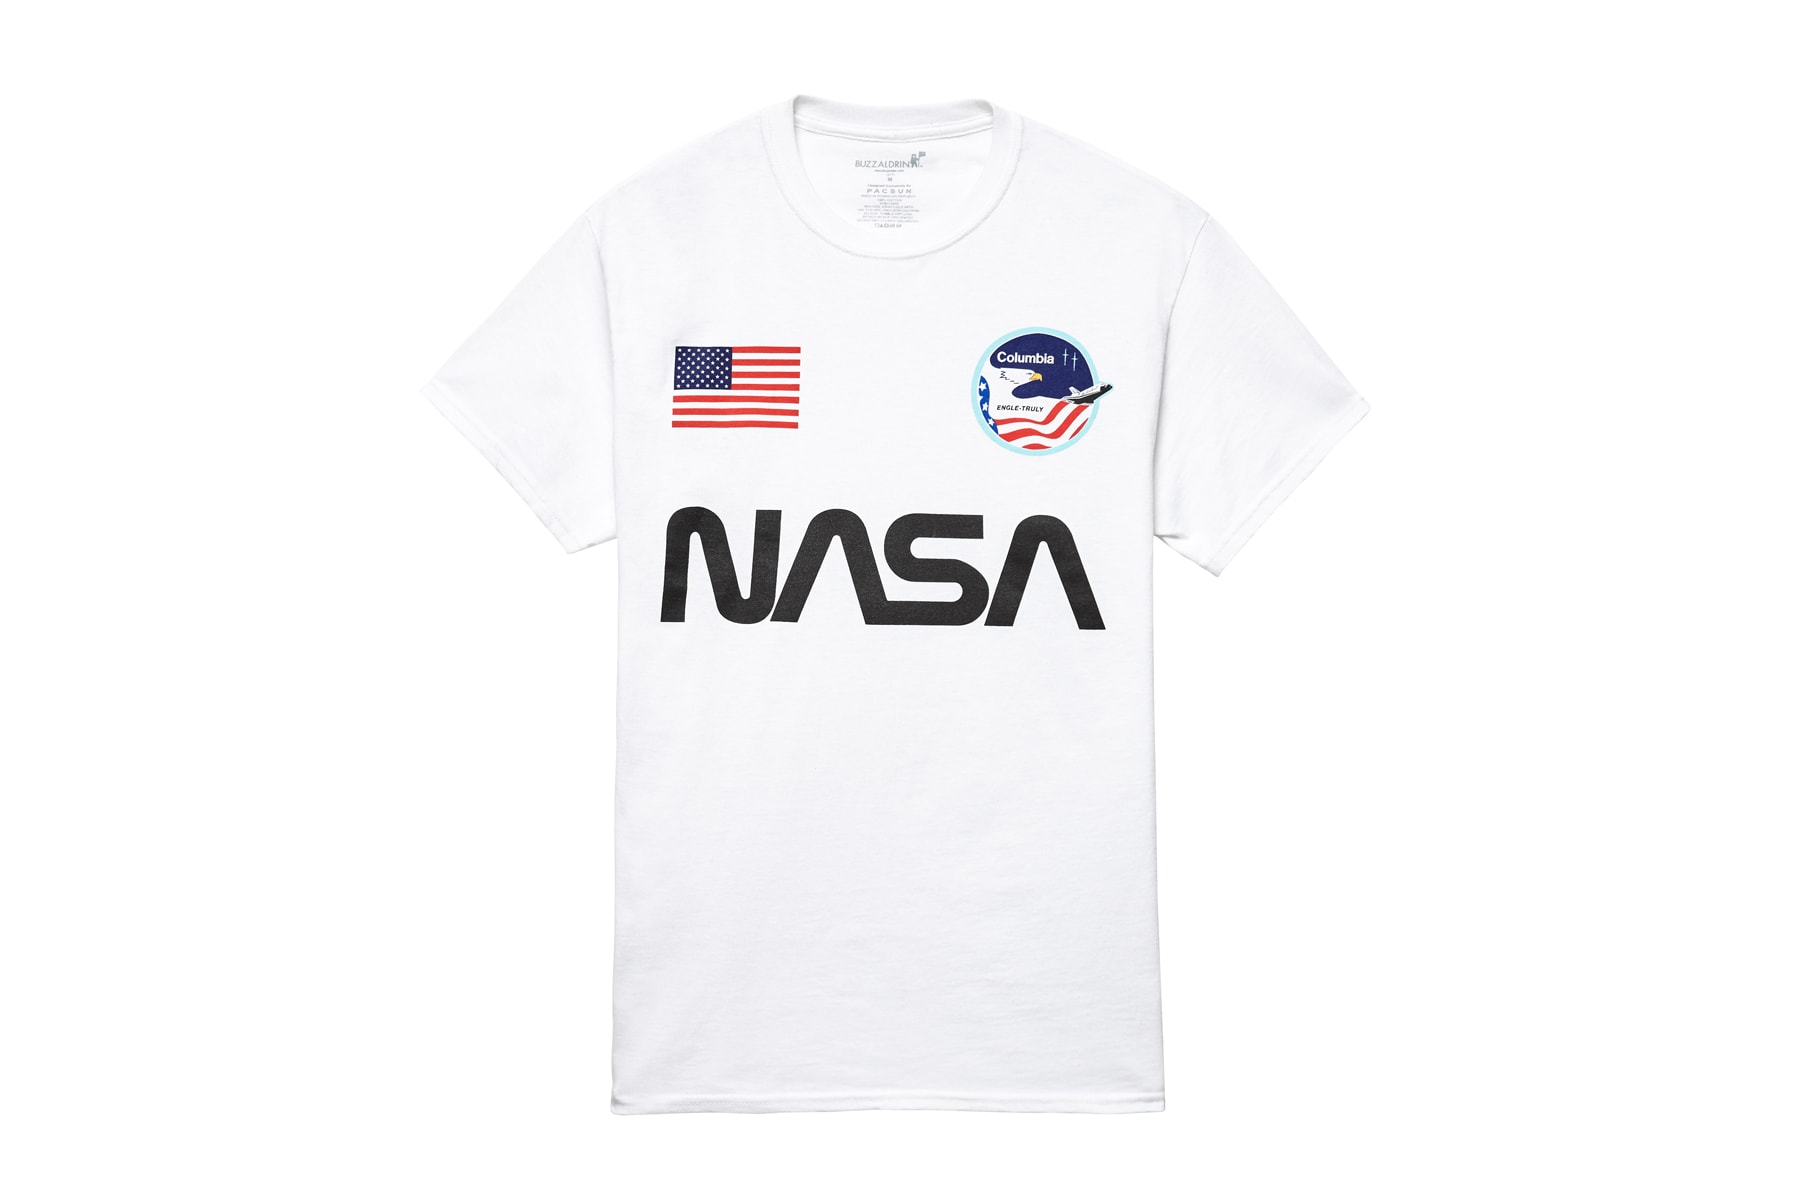 NASA PacSun Holiday Capsule lookbook Buzz Aldrin Foundation Hoodies MA-1 flight bomber jacket t-shirts